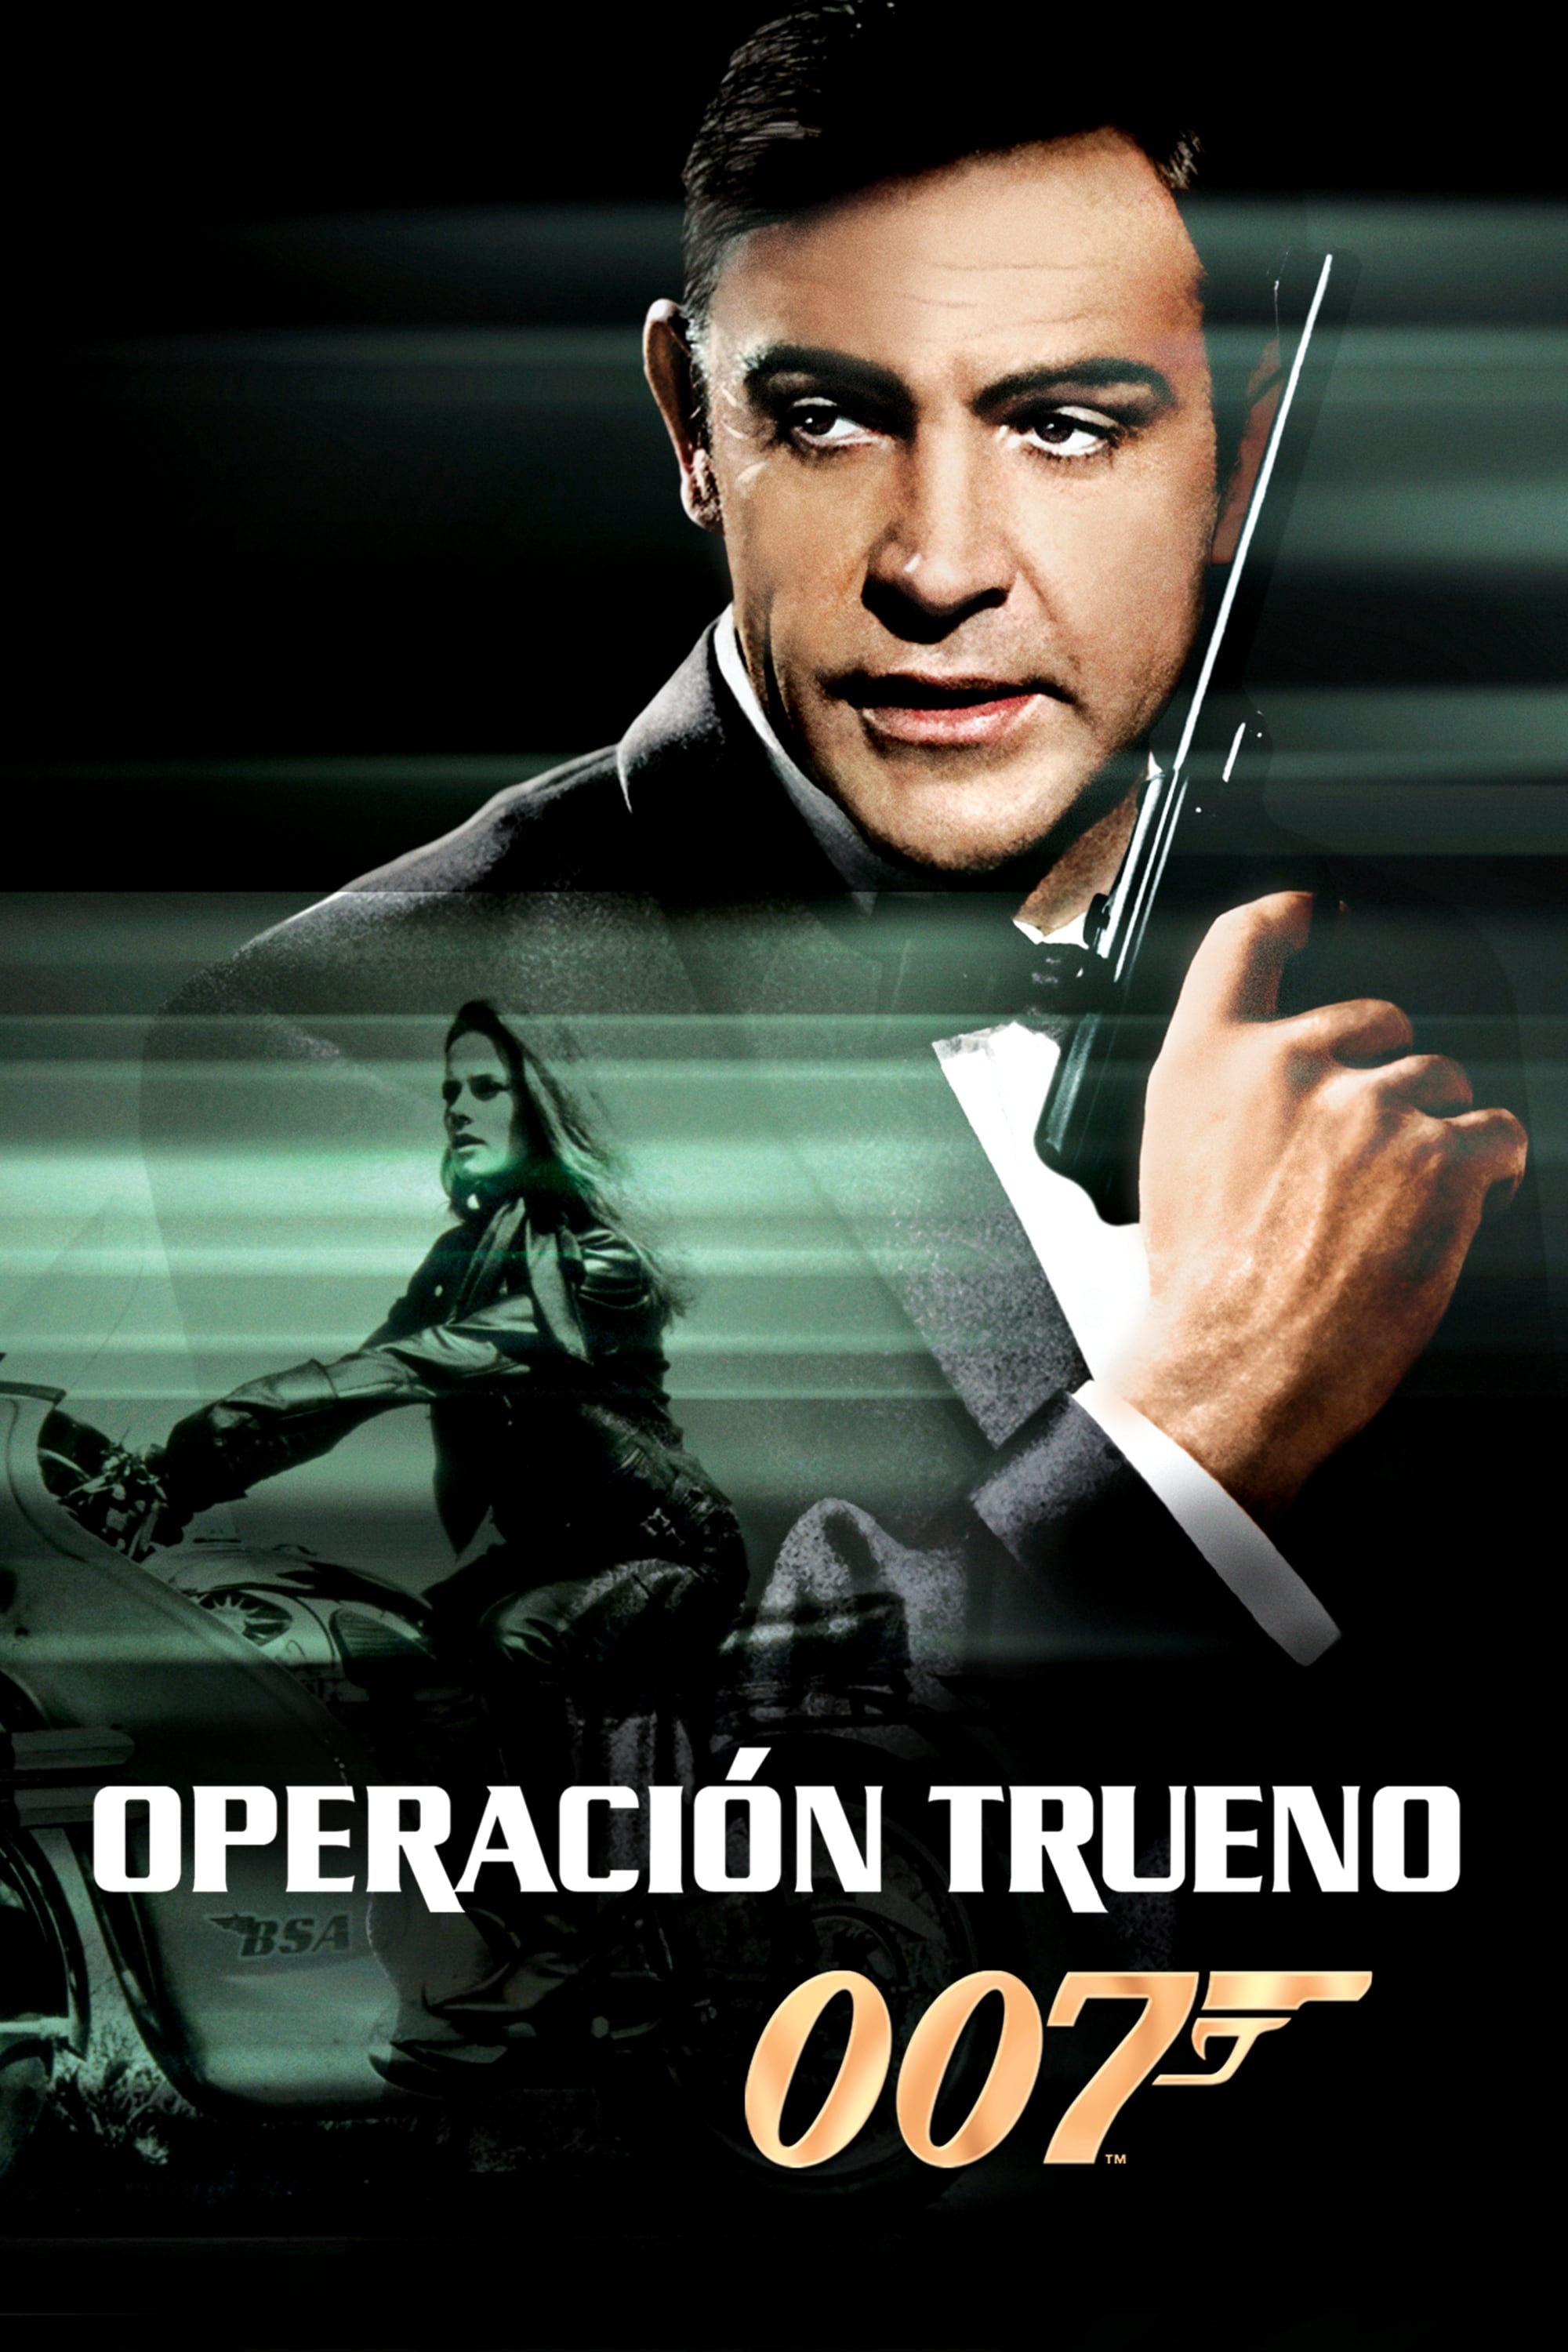 007 Operacion Trueno